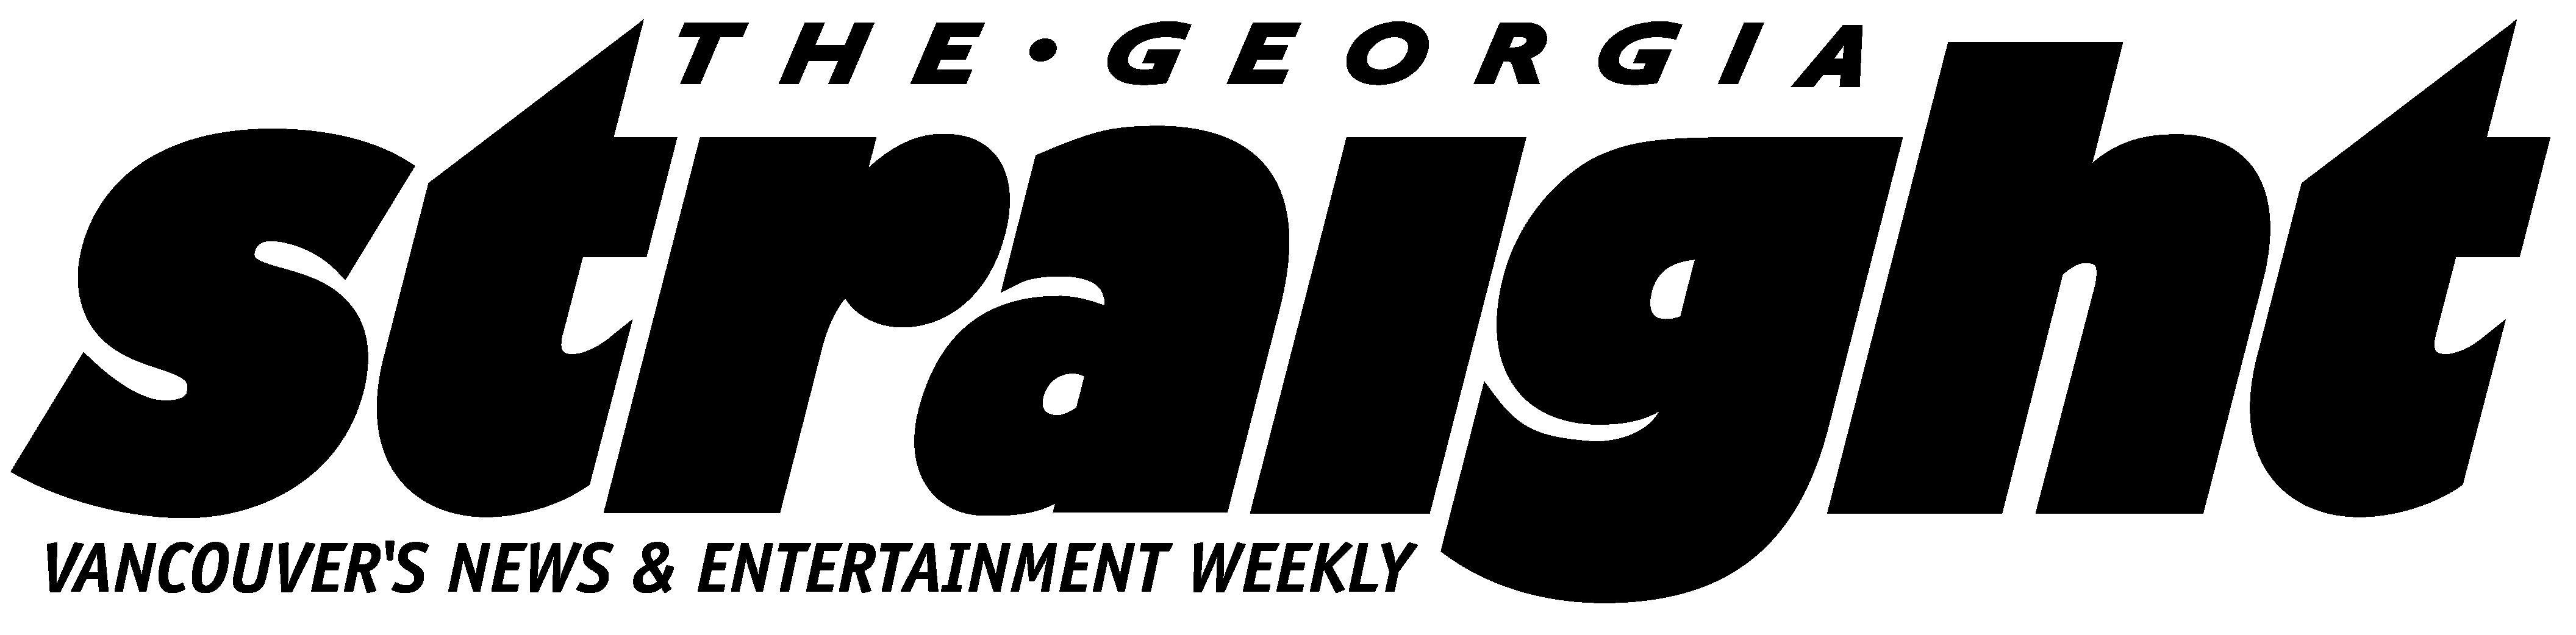 Straight Logo - Georgia-Straight-logo- Cited